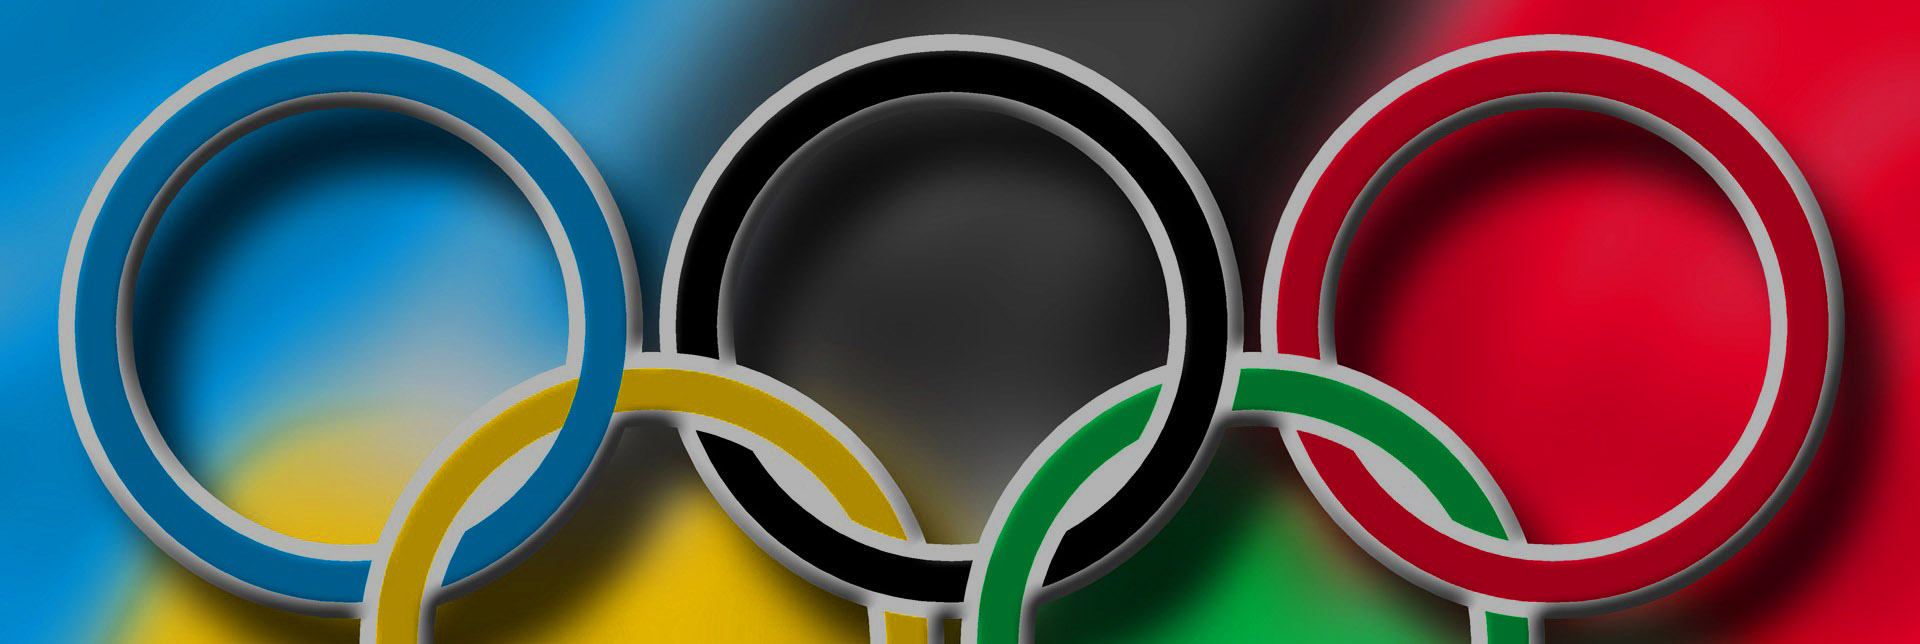 olympic-rings2